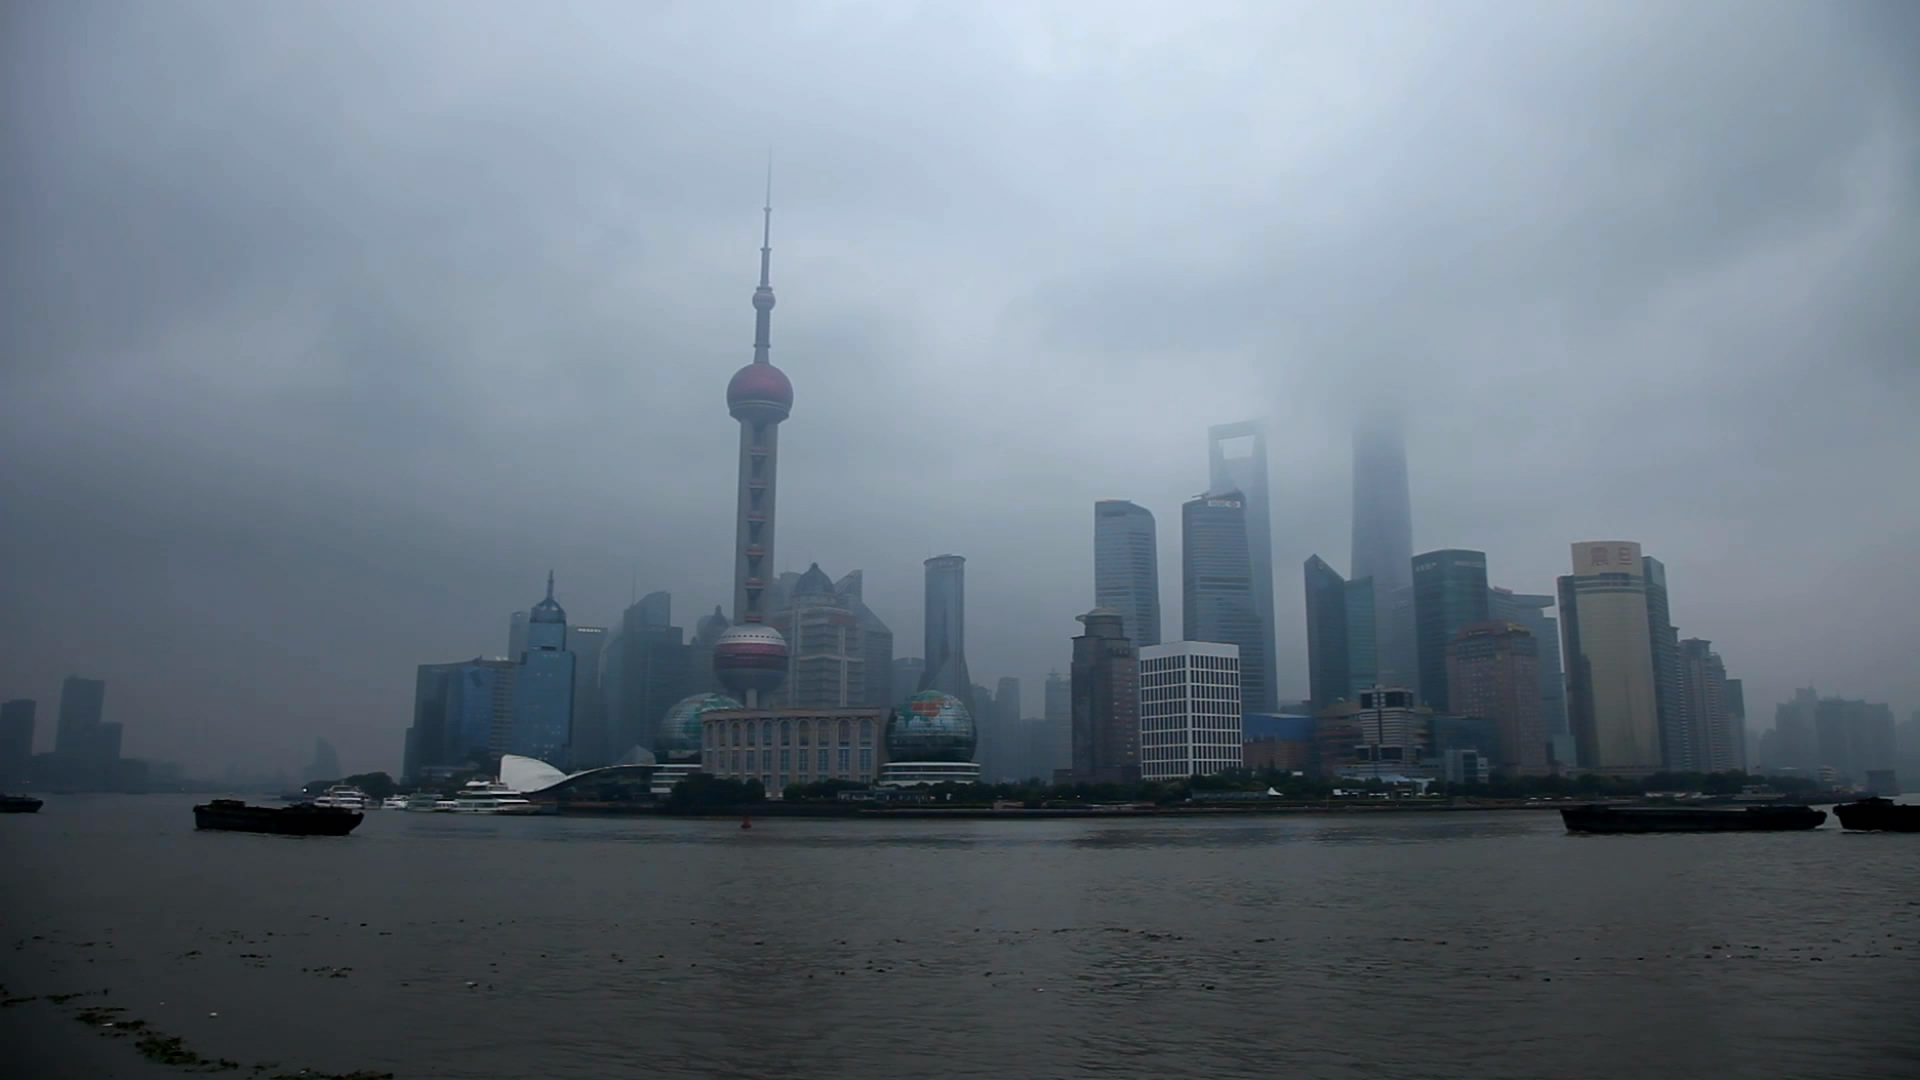 Huangpu River cruise ship time lapse photography